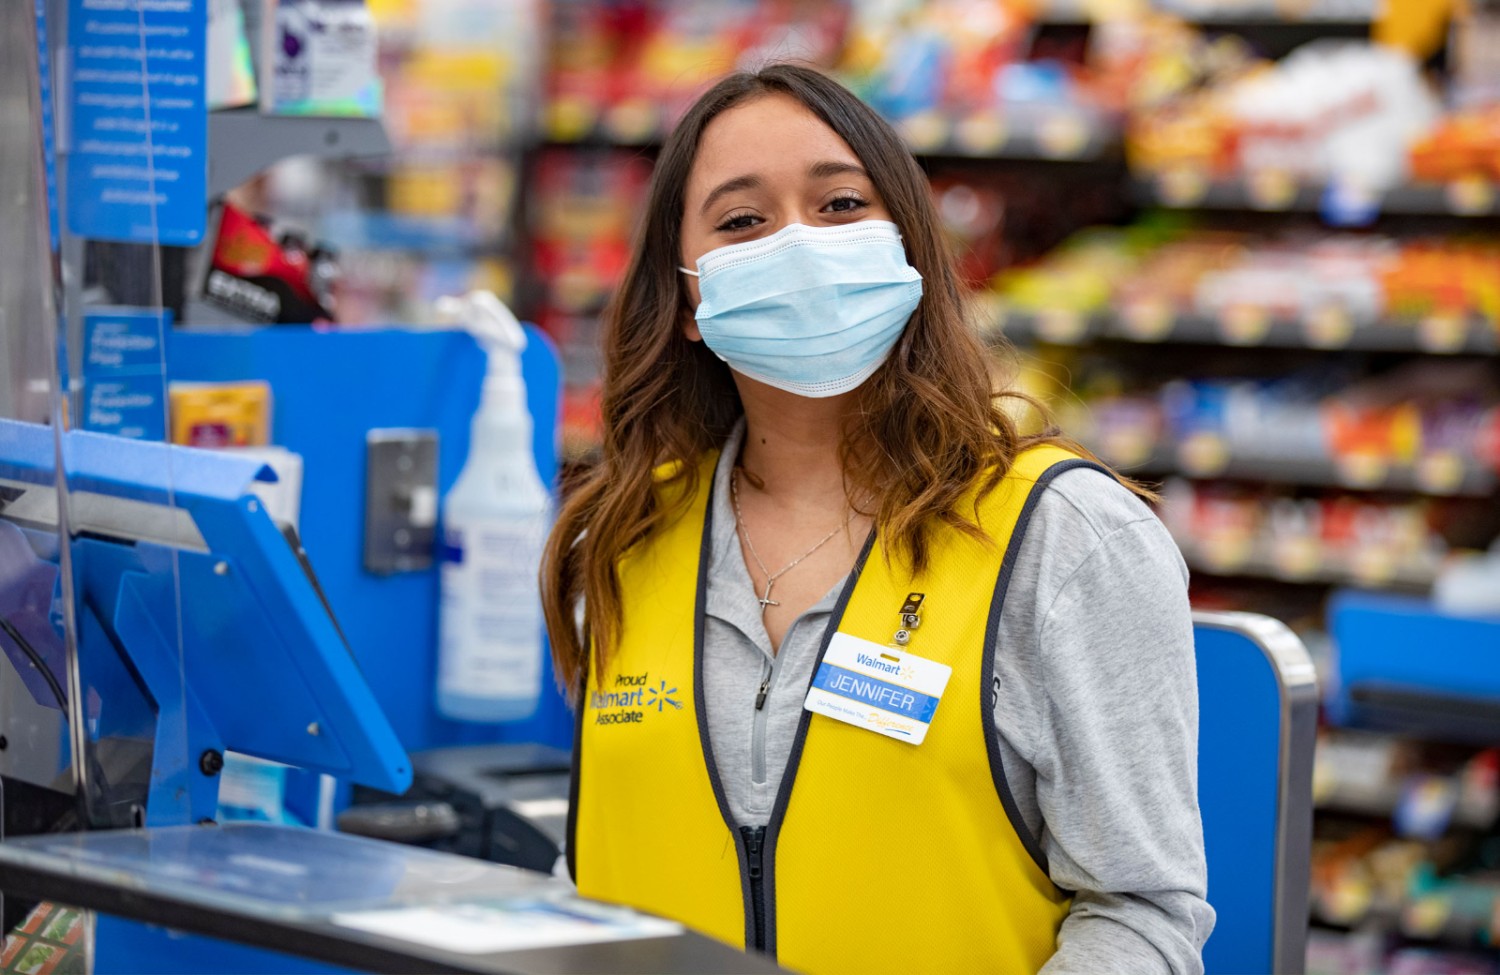 Walmart Expands Health Care Benefits Offerings for U.S. Associates